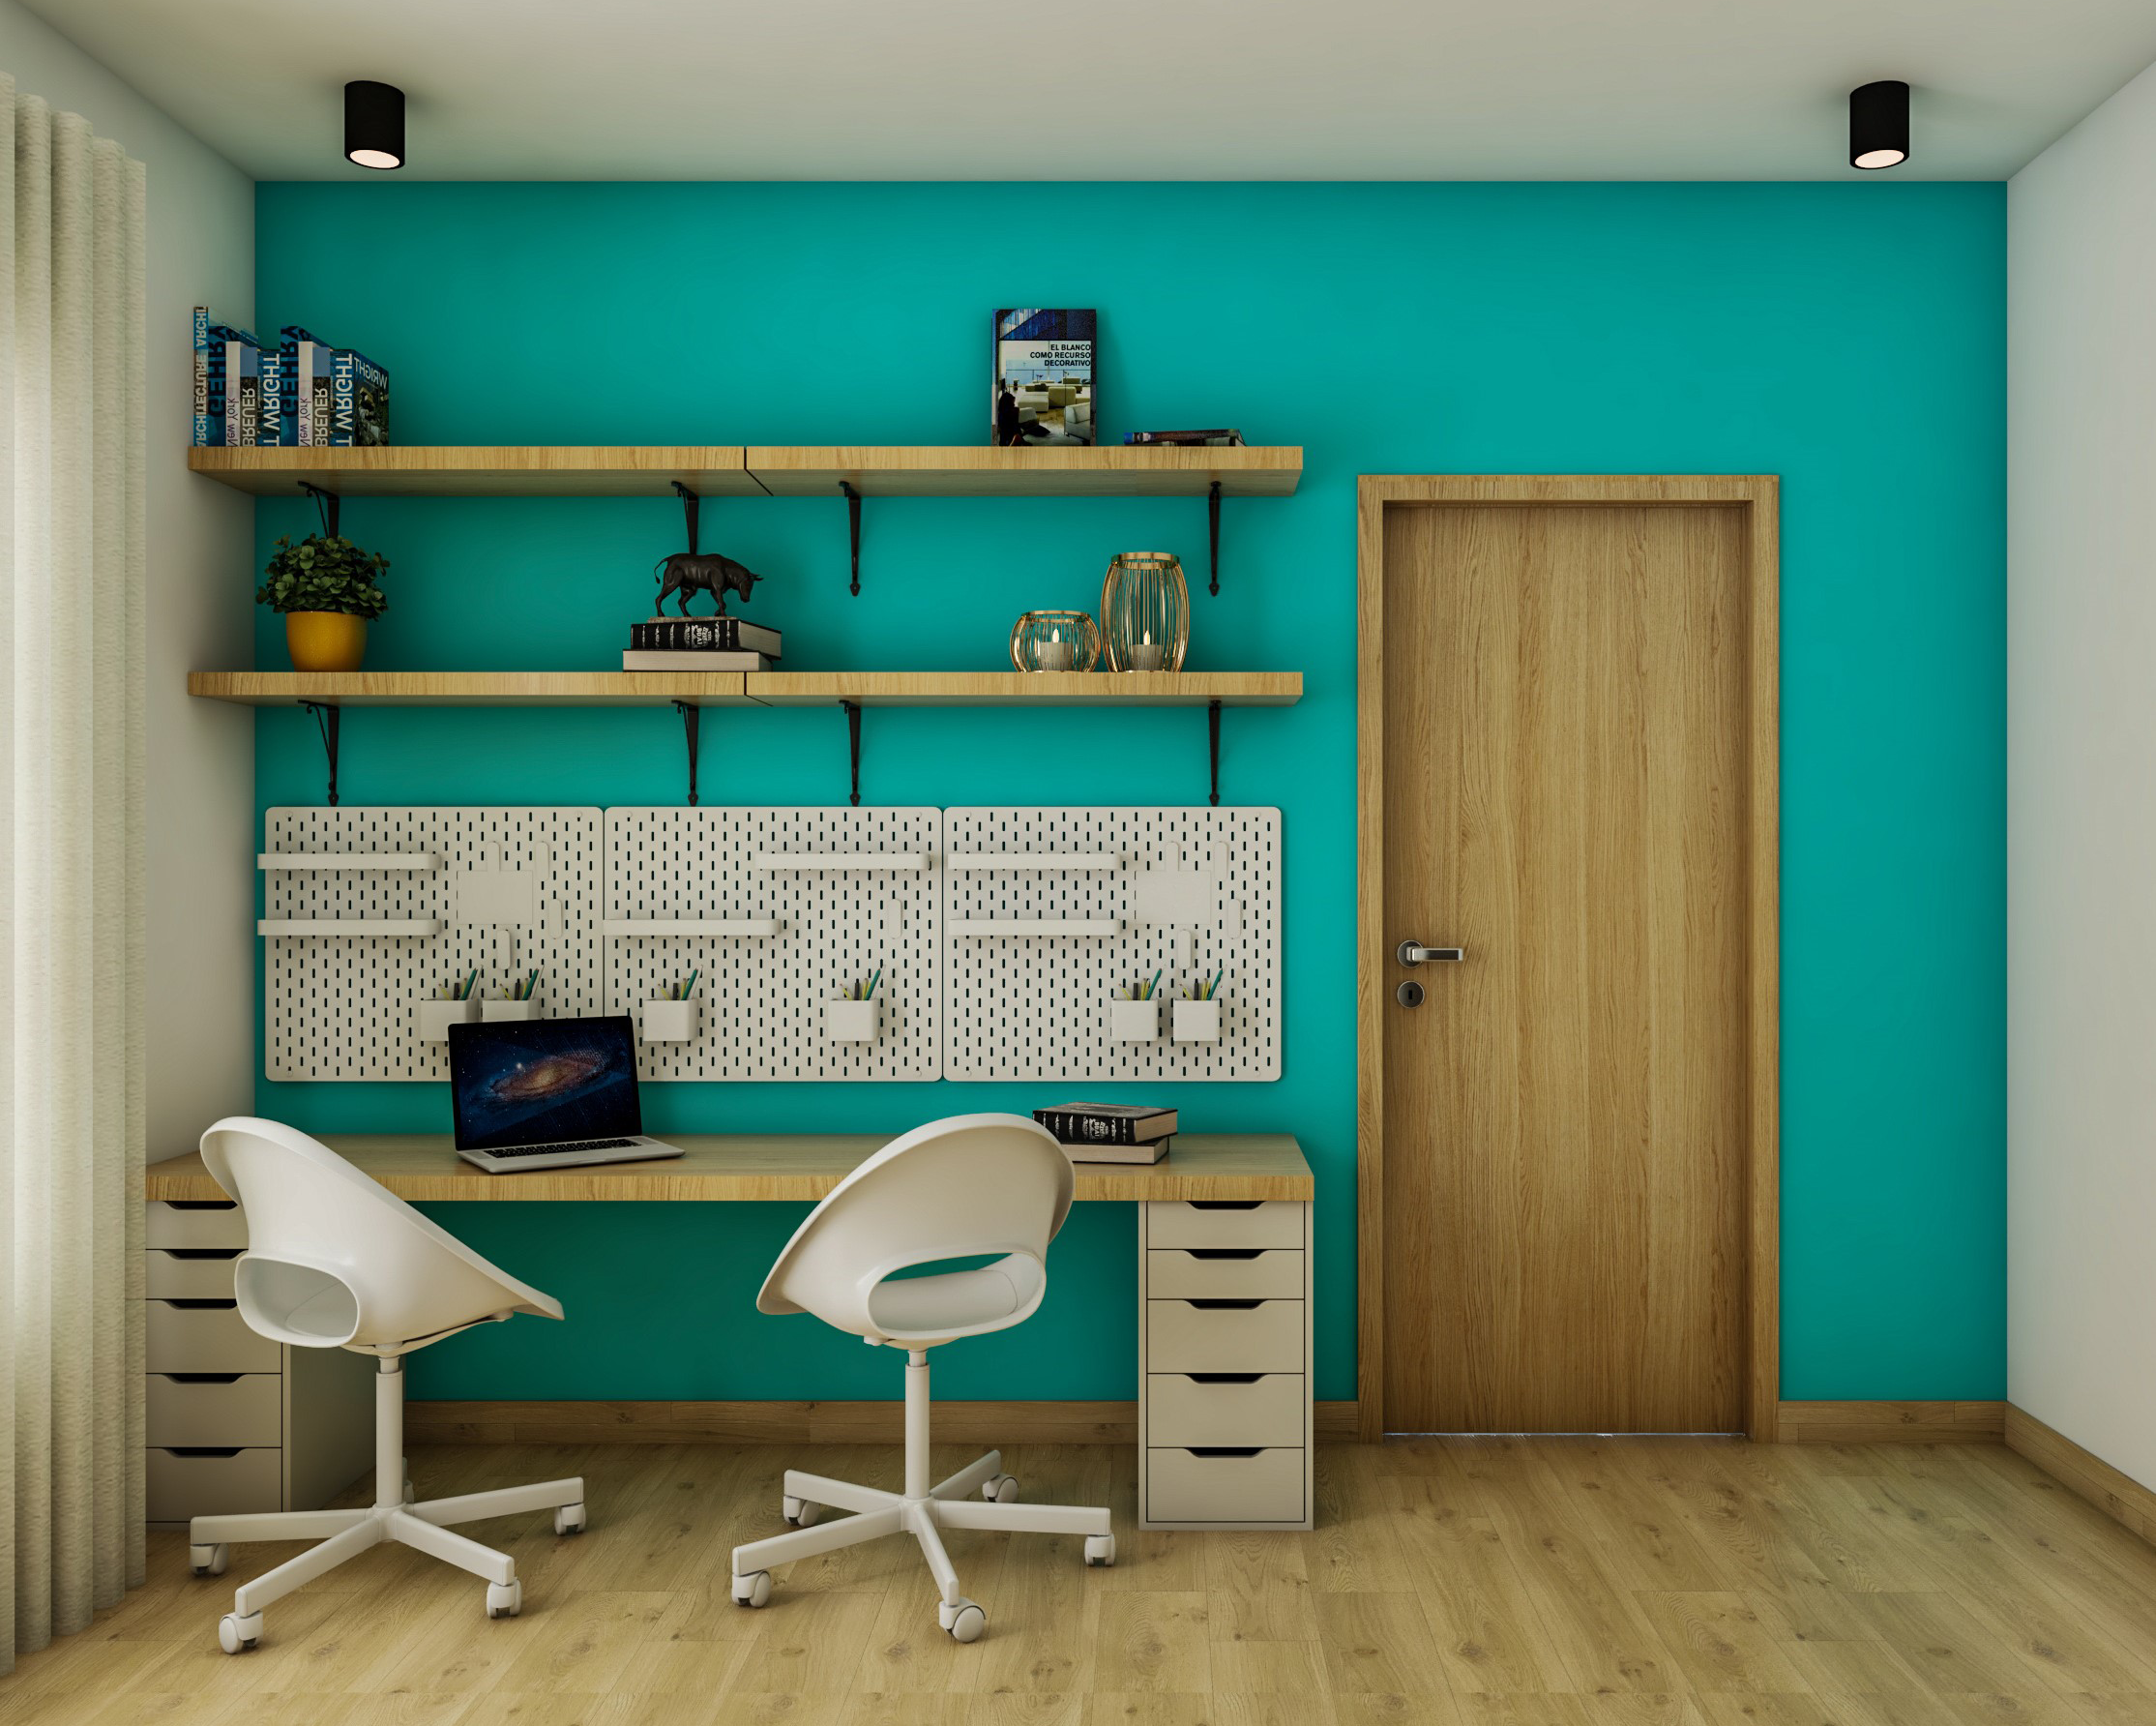 Spacious Study Room Interior Design With Open Shelves